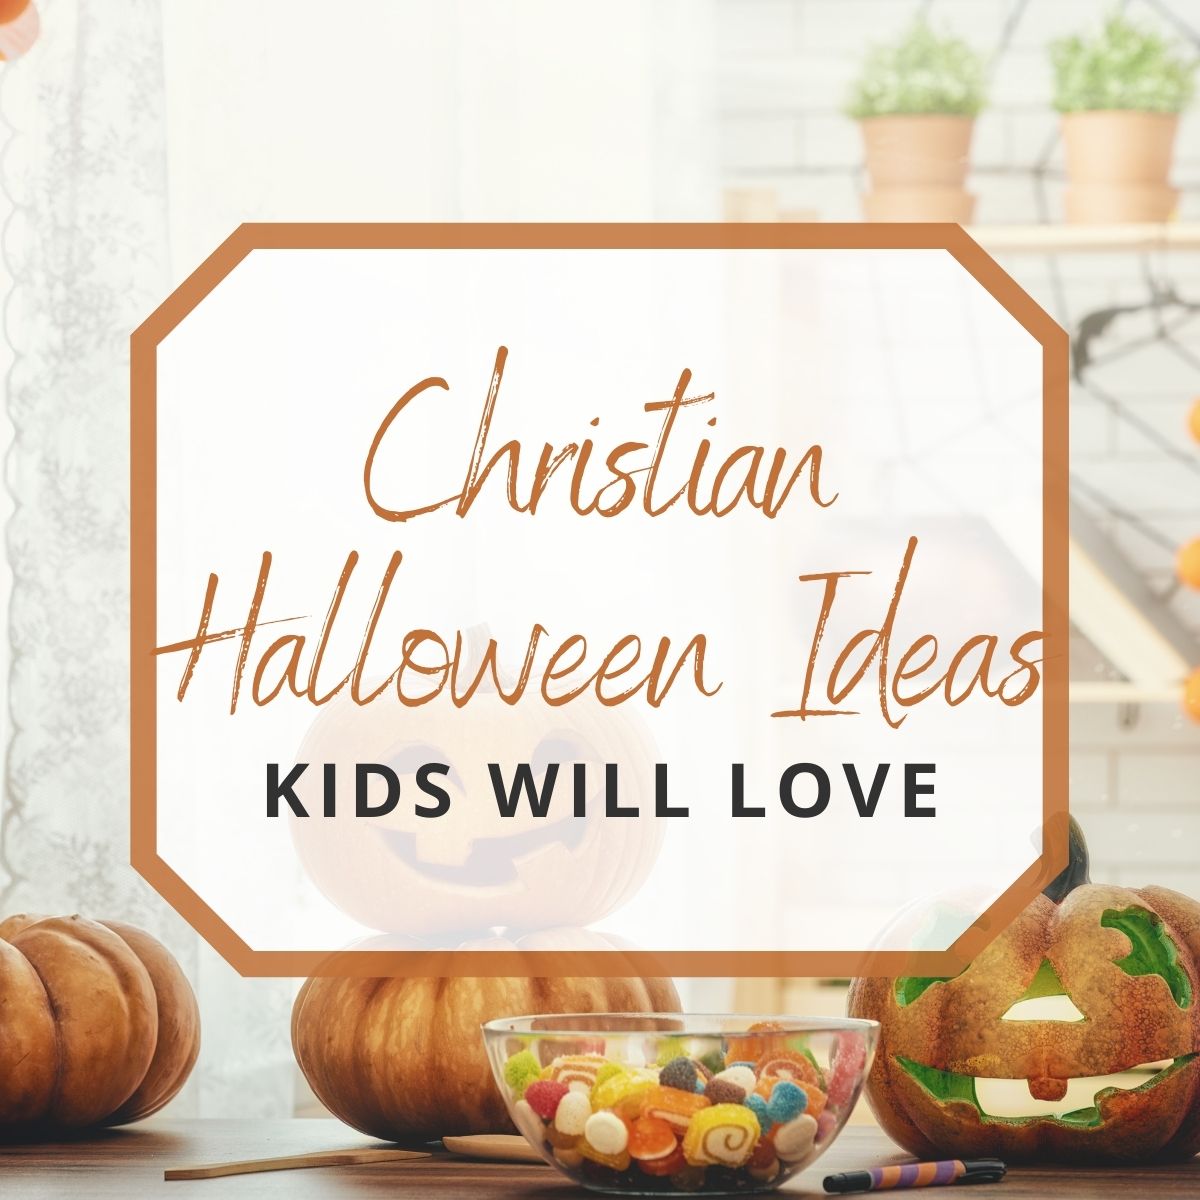 pumpkins and candies for christian halloween ideas